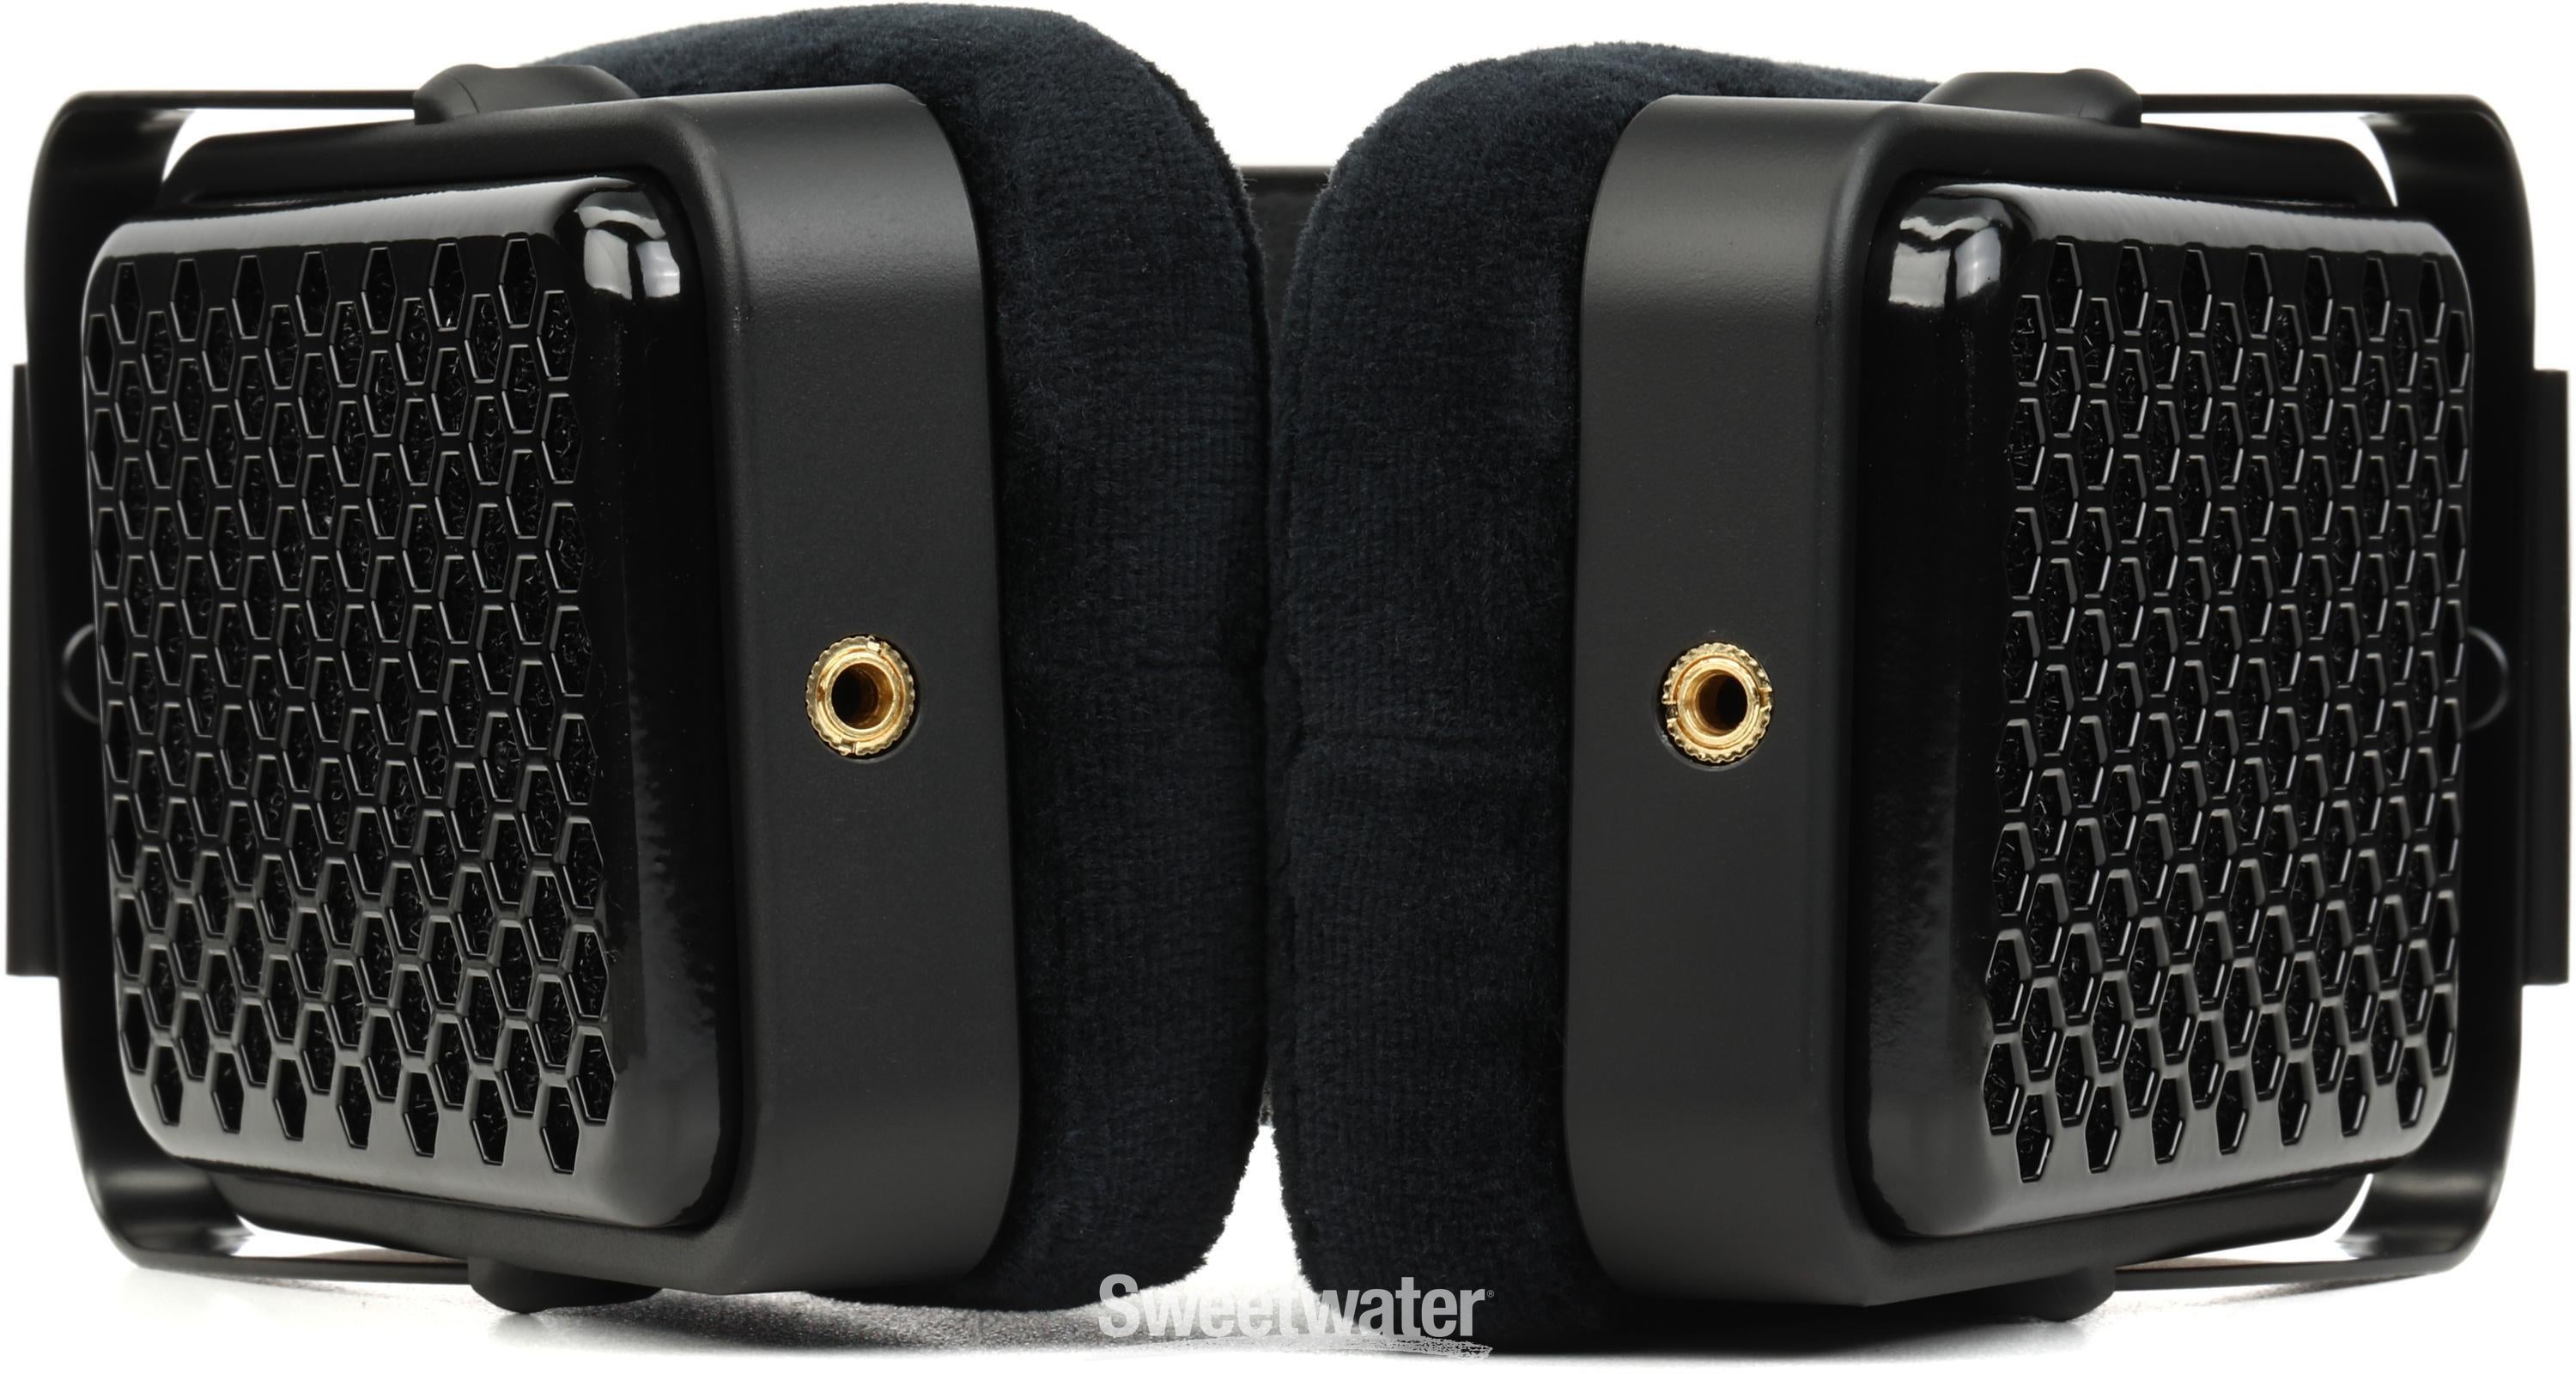 Avantone Pro Planar the II Open-back Headphones - Black | Sweetwater